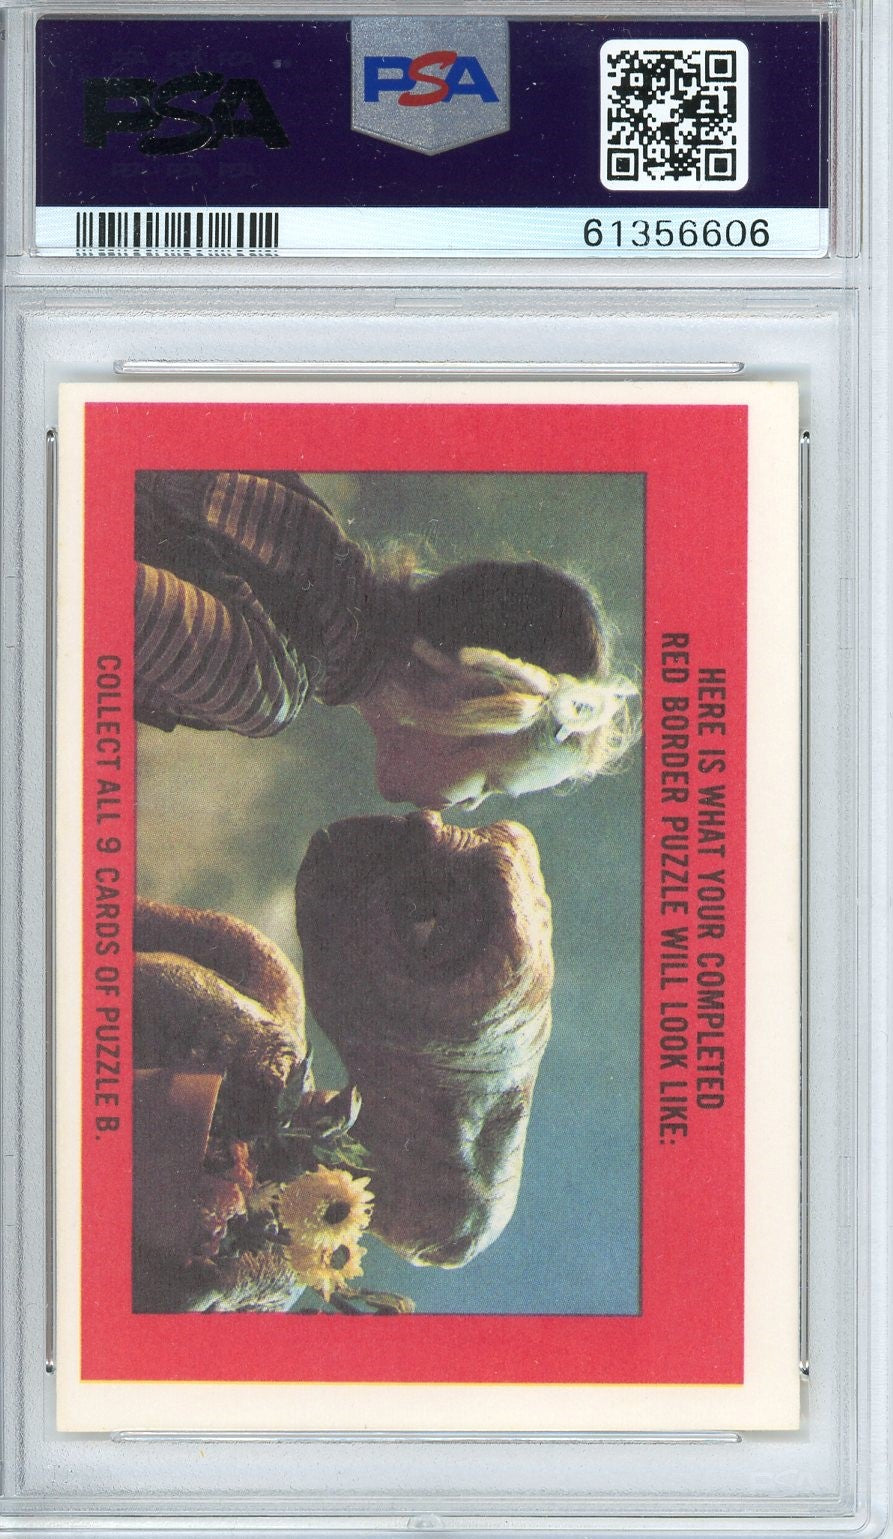 1982 Topps E.T. Sticker Card PSA 7